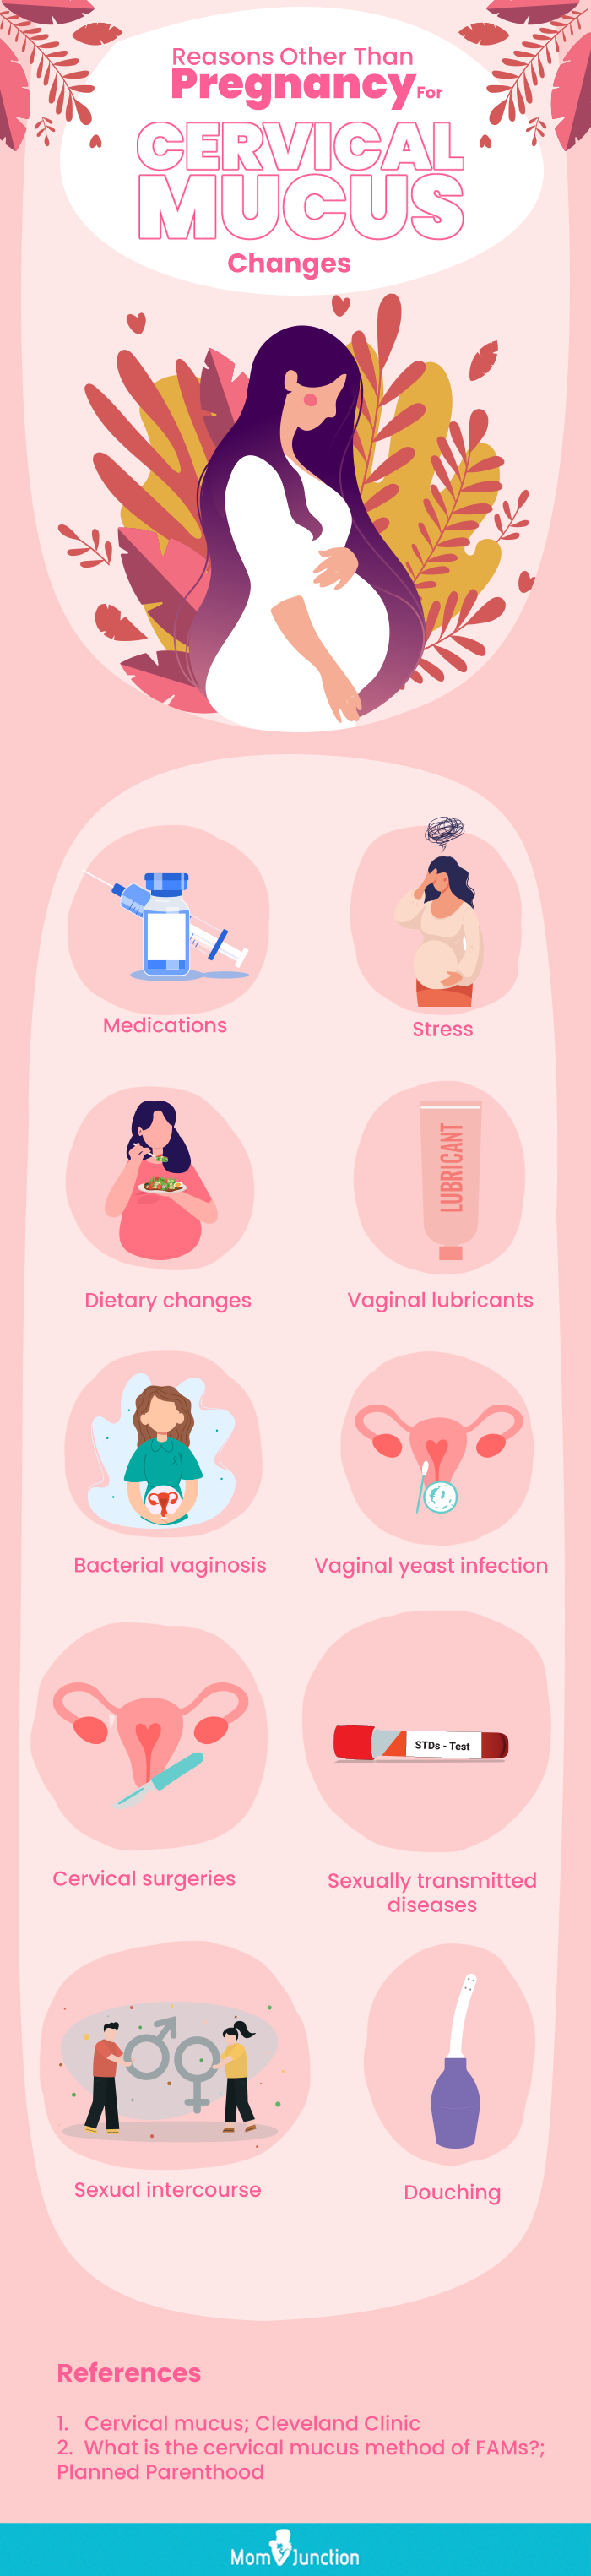 ovulation discharge chart